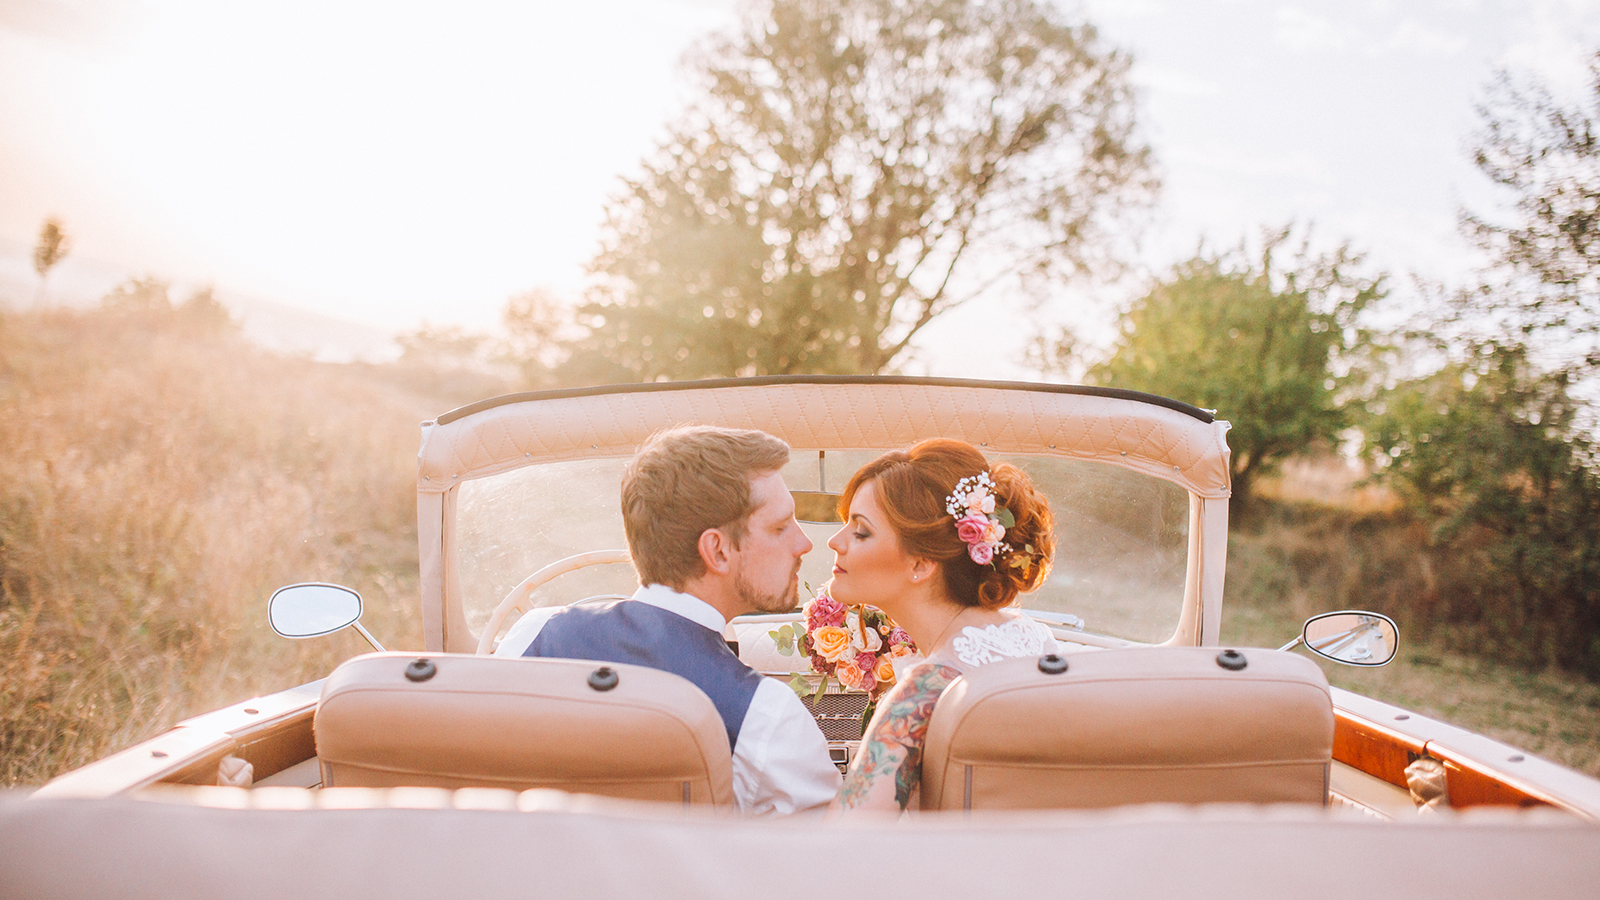 Stylish Loving wedding couple kissing and hugging on nature near retro car